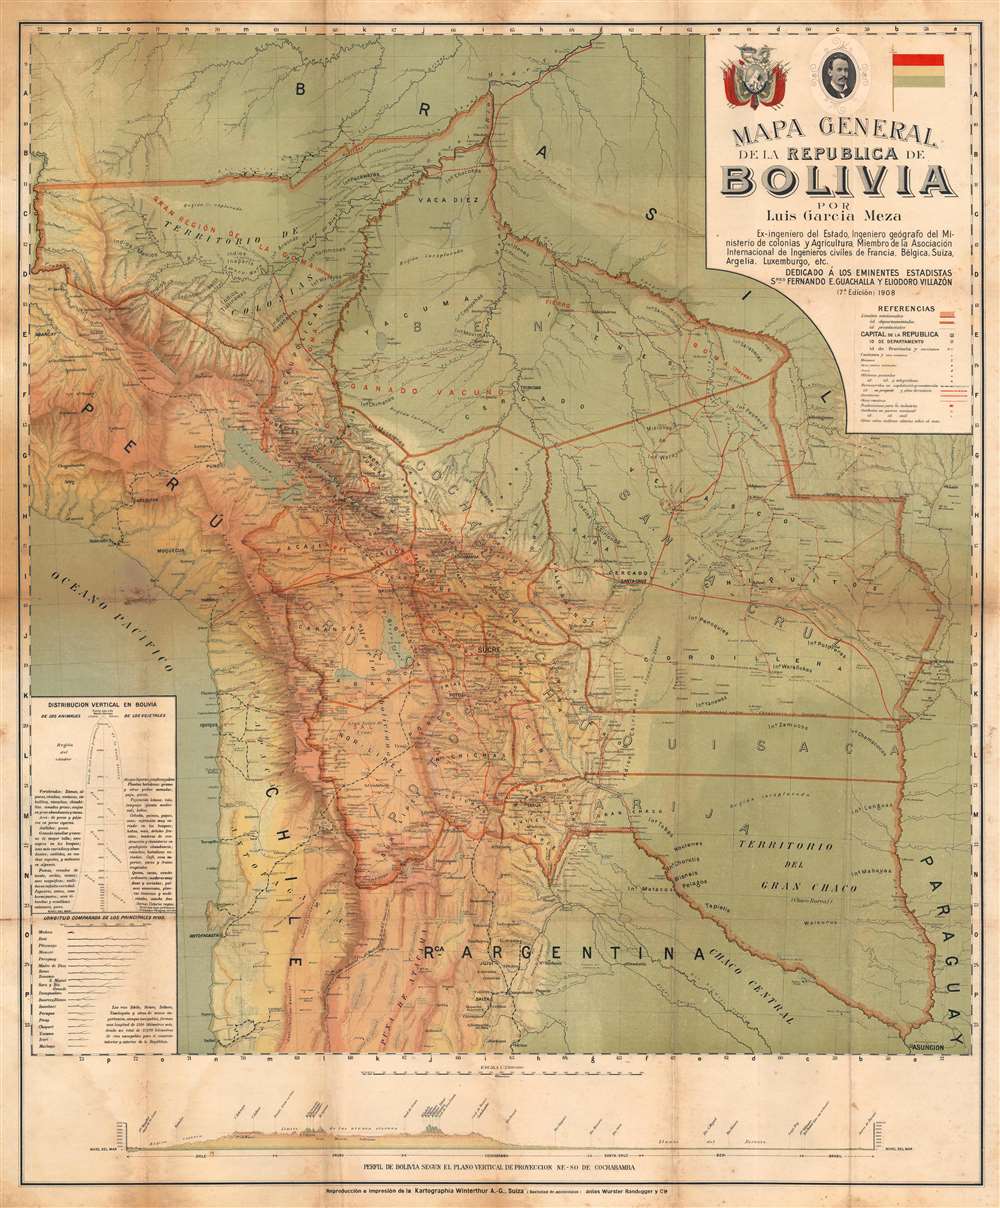 1908 Garcia Meza Railroad Map of Bolivia